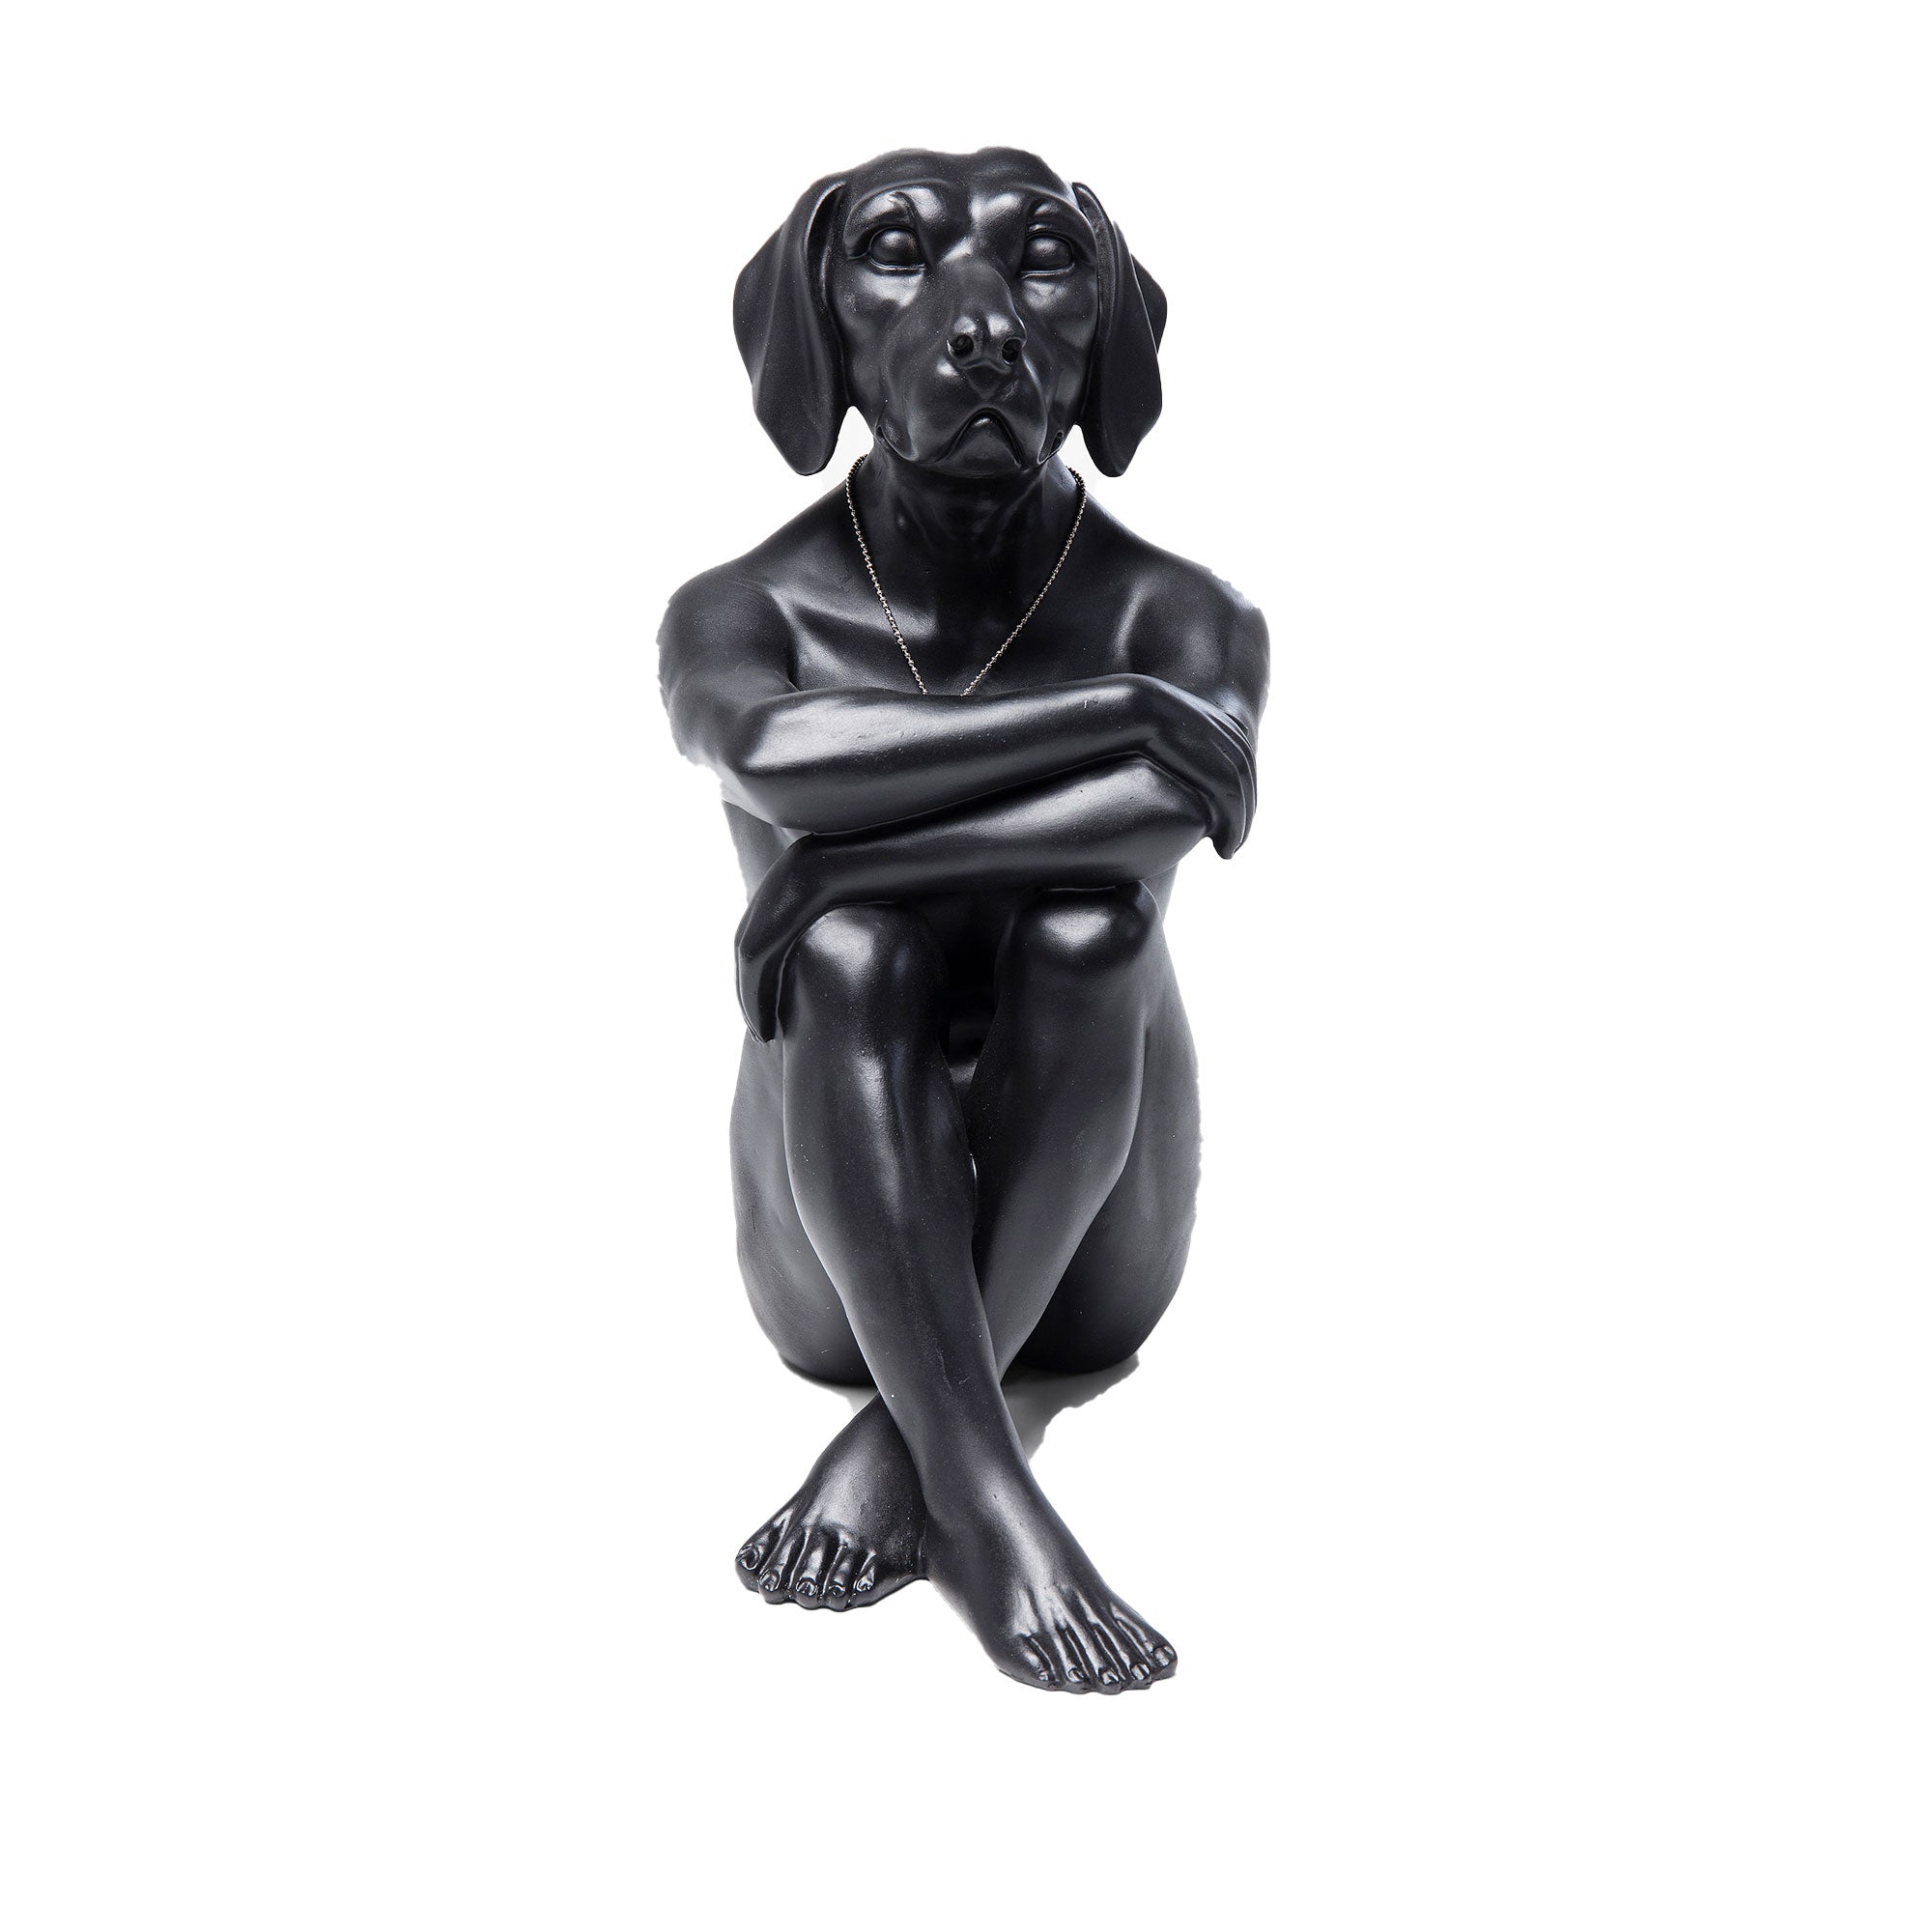 Dog Figure Arms Folded - High Gloss Black